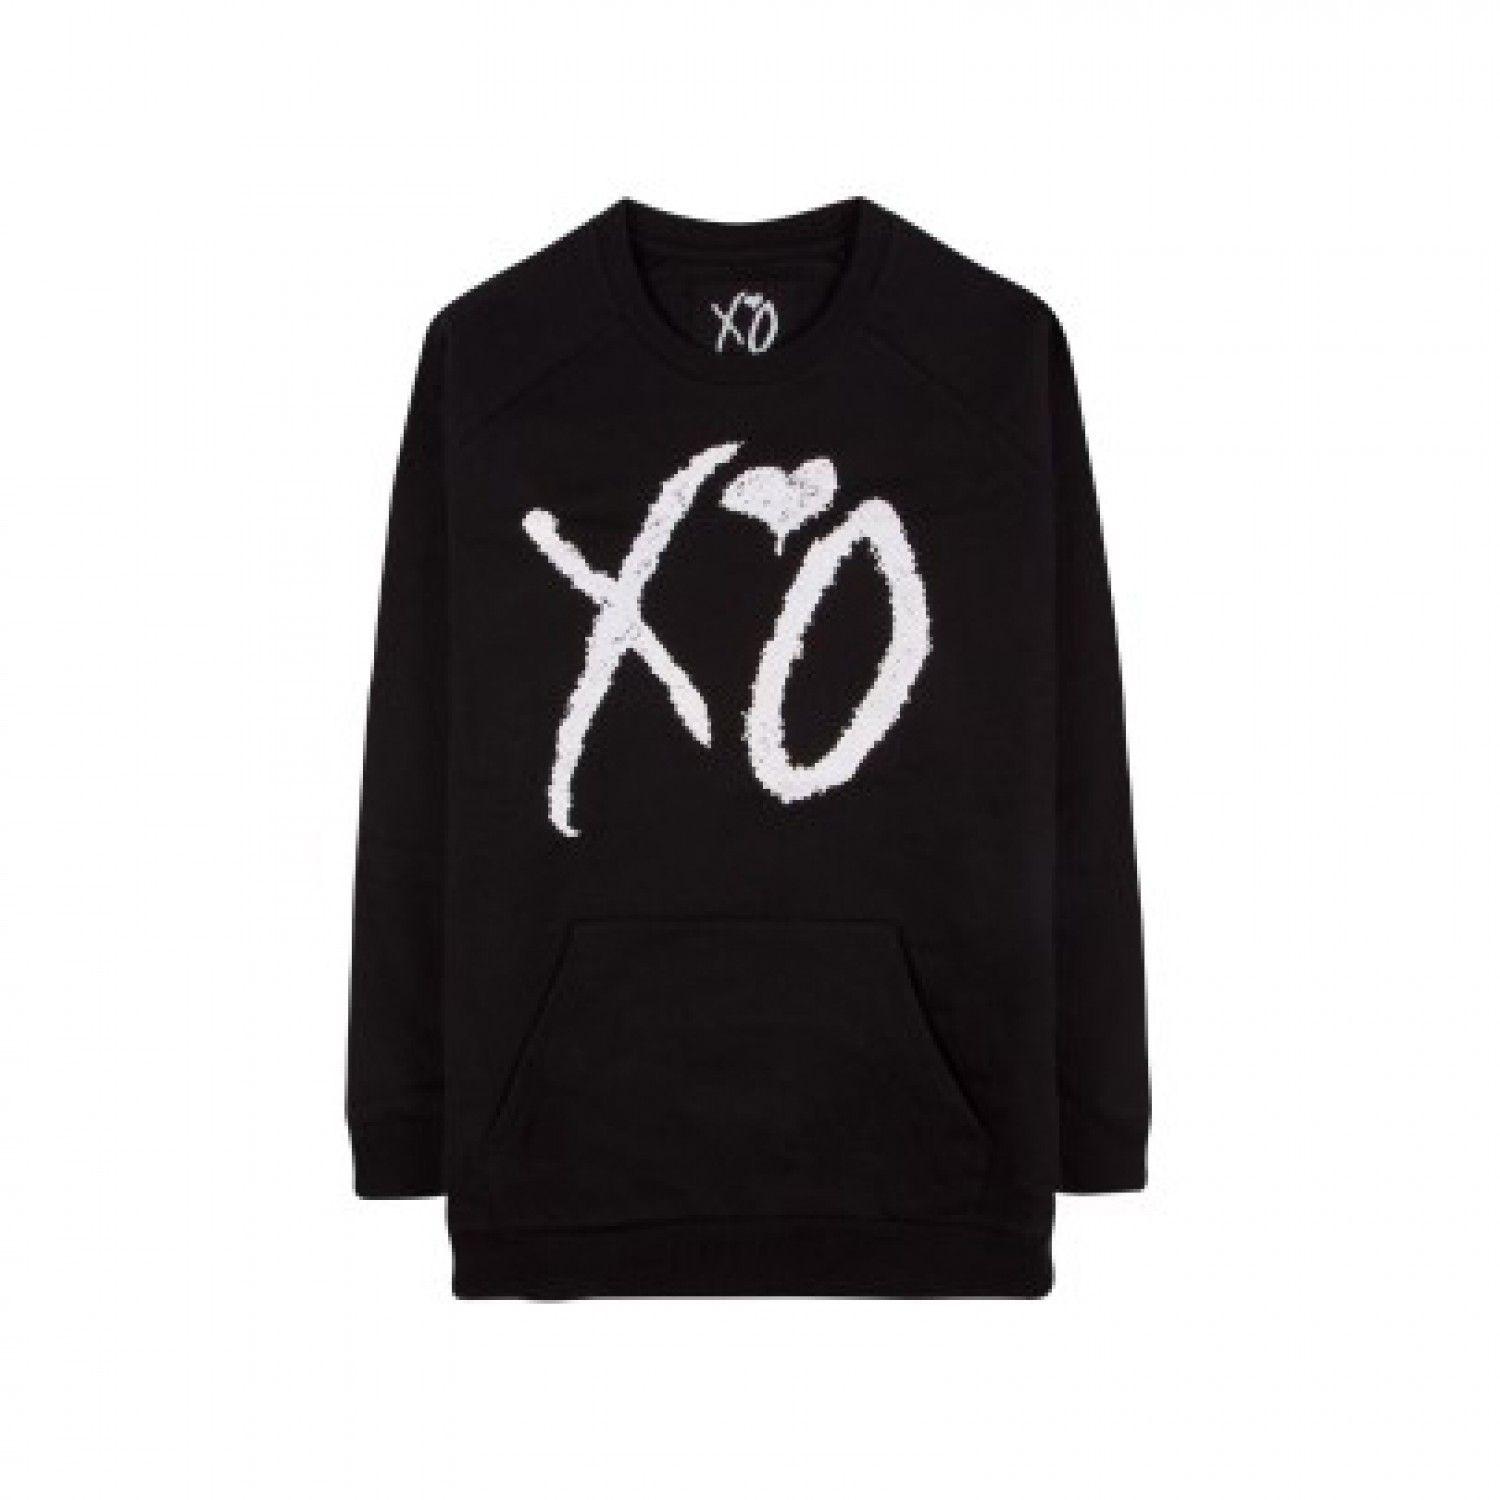 Xo Logo - The Weeknd